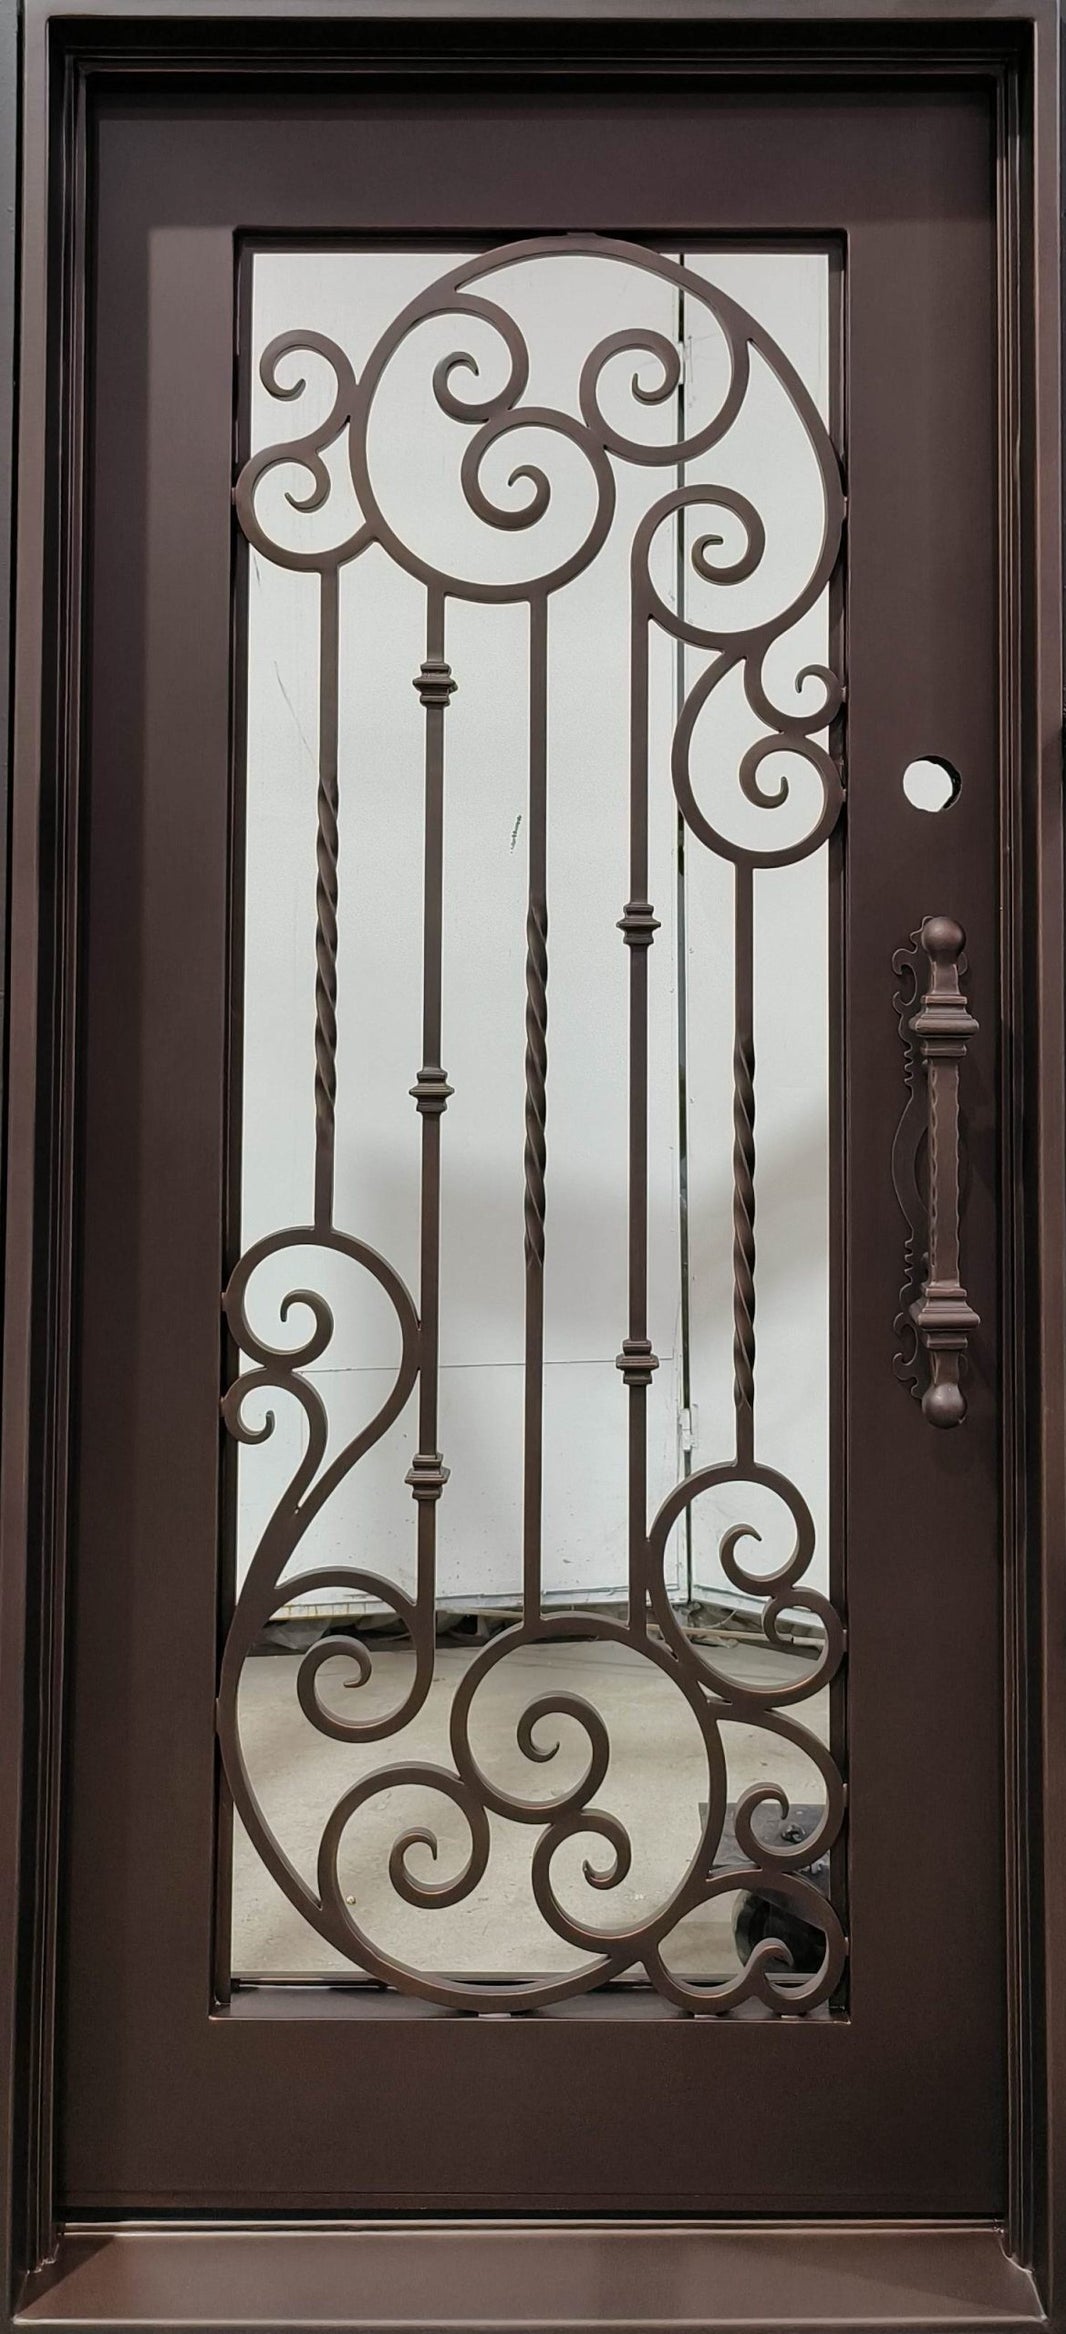 Classic Iron design Door | Square Top With kickplate | Model # IWD 925